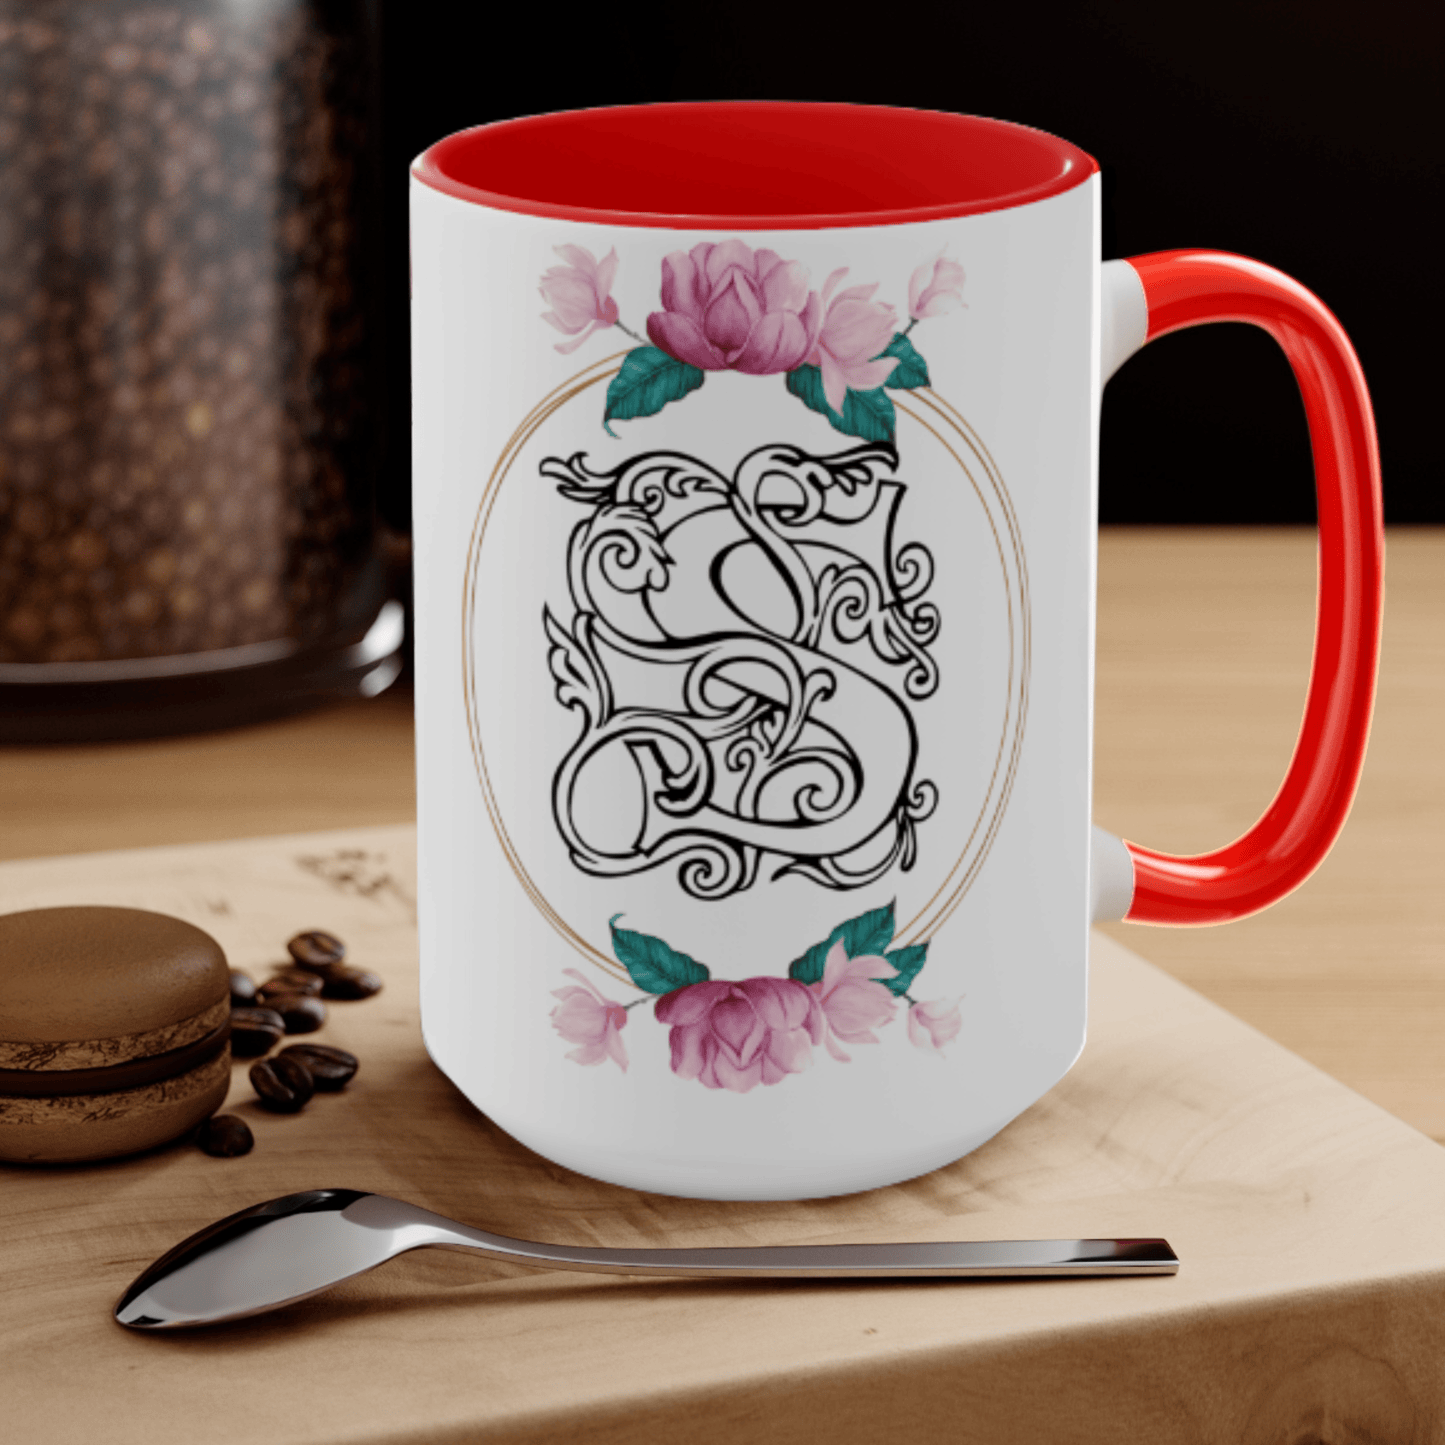 S Monogrammed coffee Mug with red hanle